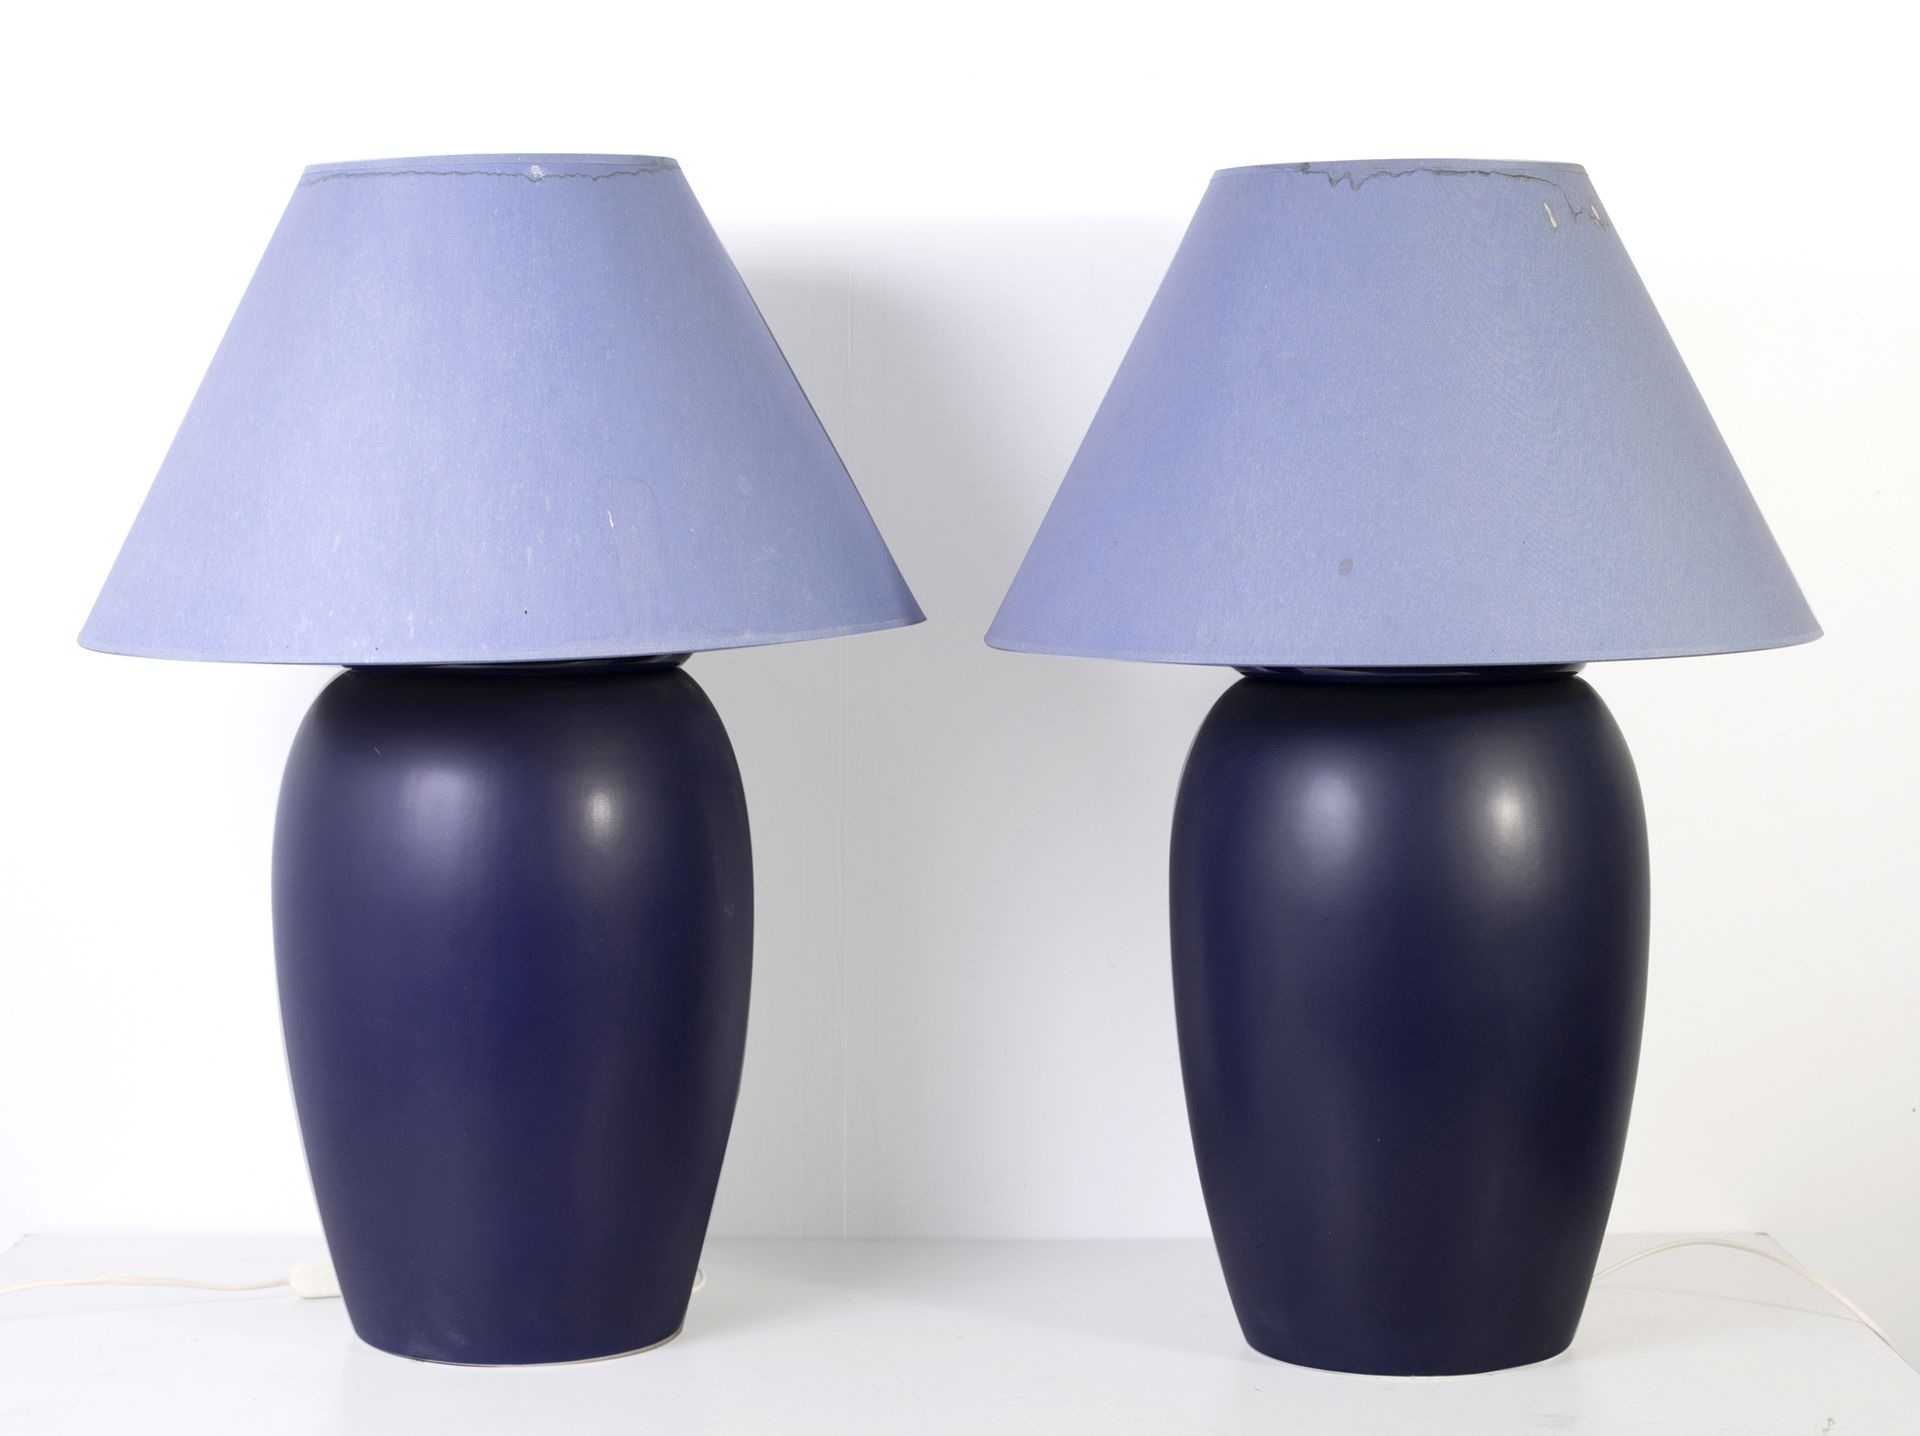 Null Coppia di lampade da tavolo in ceramica blu 

H_73 cm